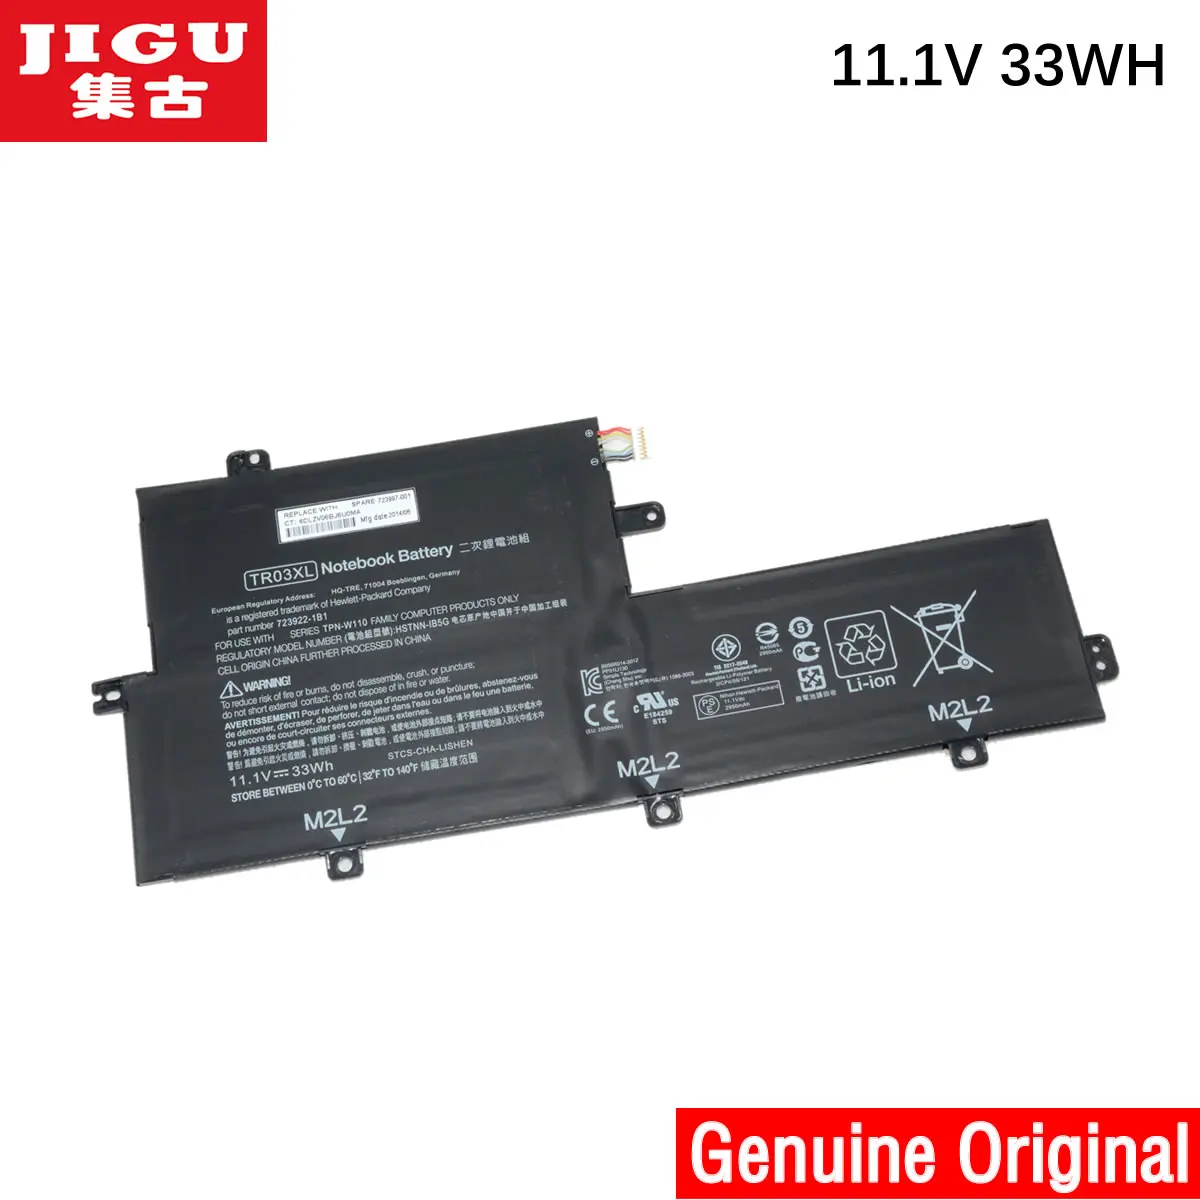 

JIGU 11.1V 33WH New Genuine Battery TR03XL For HP Split X2 13 Series HSTNN-DB5G HSTNN-IB5G TPN-W110 723922-2B1 723922-171